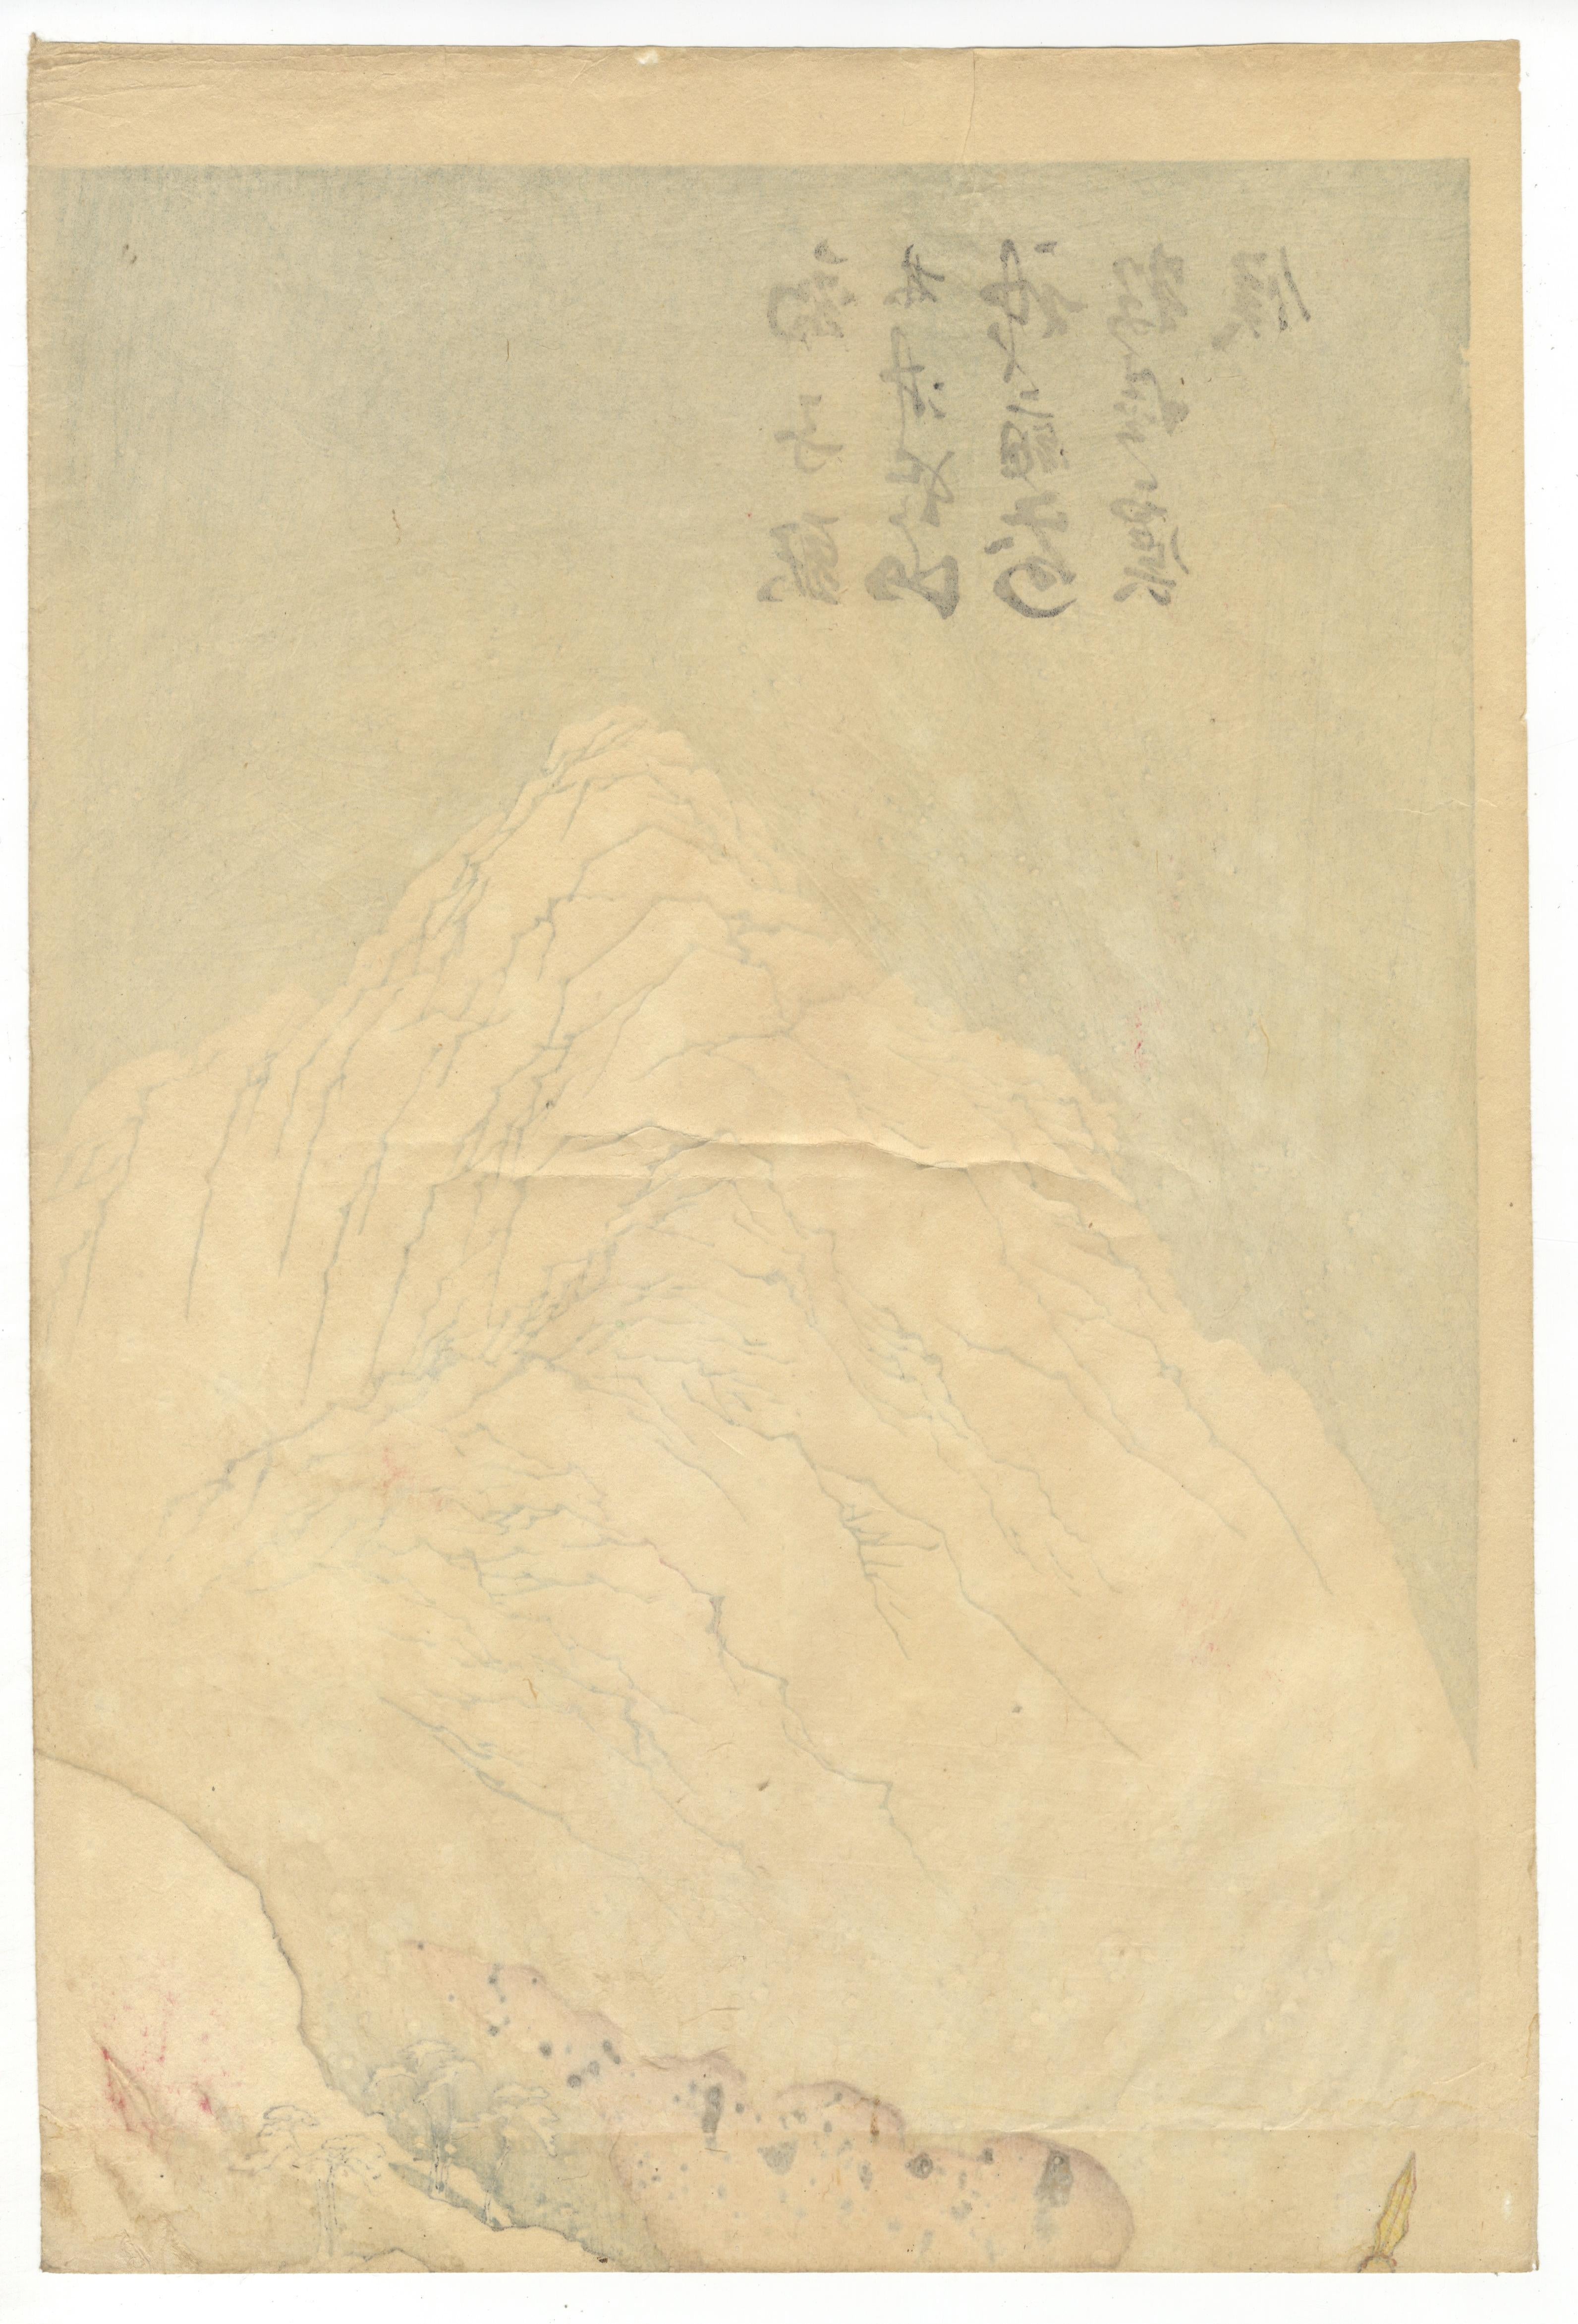 Artist: Yoshitoshi Tsukioka (1839-1892)
Title: Lin Chong Kills Officer Lu Qian Near the Temple of the Mountain Spirit
Publisher: Matsui Eikichi
Date: 1886
Dimensions: Top: 25.8 x 38.0 cm; Bottom: 25.7 x 38.3
Condition: Light creases around the